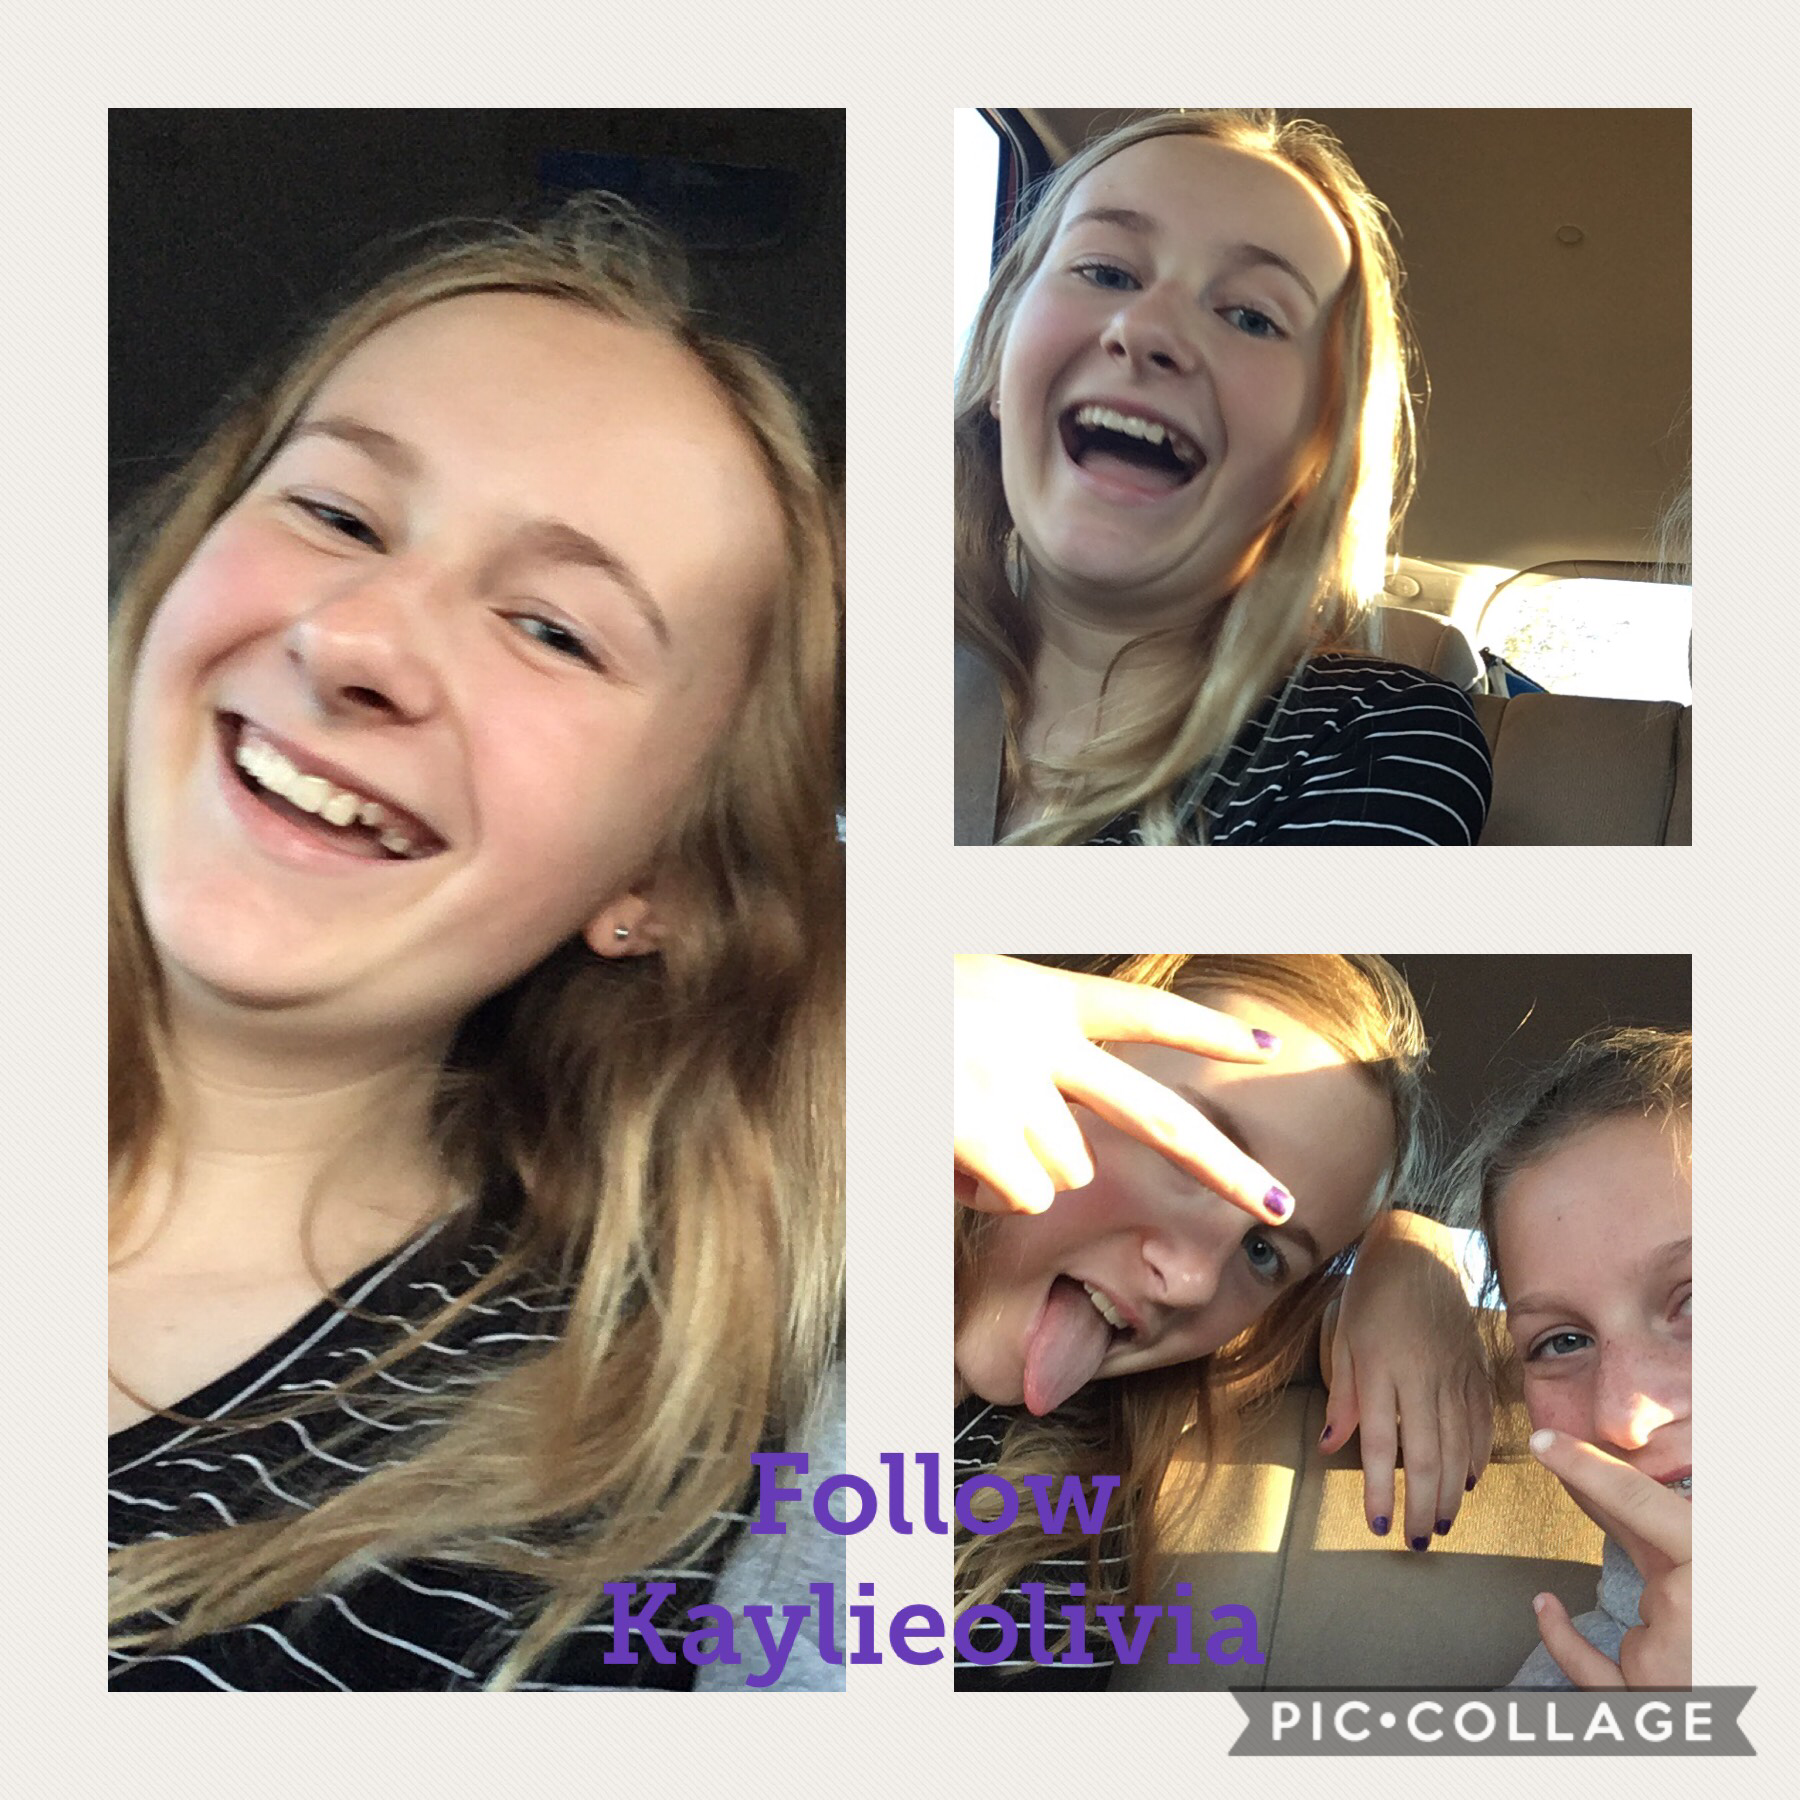 Follow Kaylie olivia
